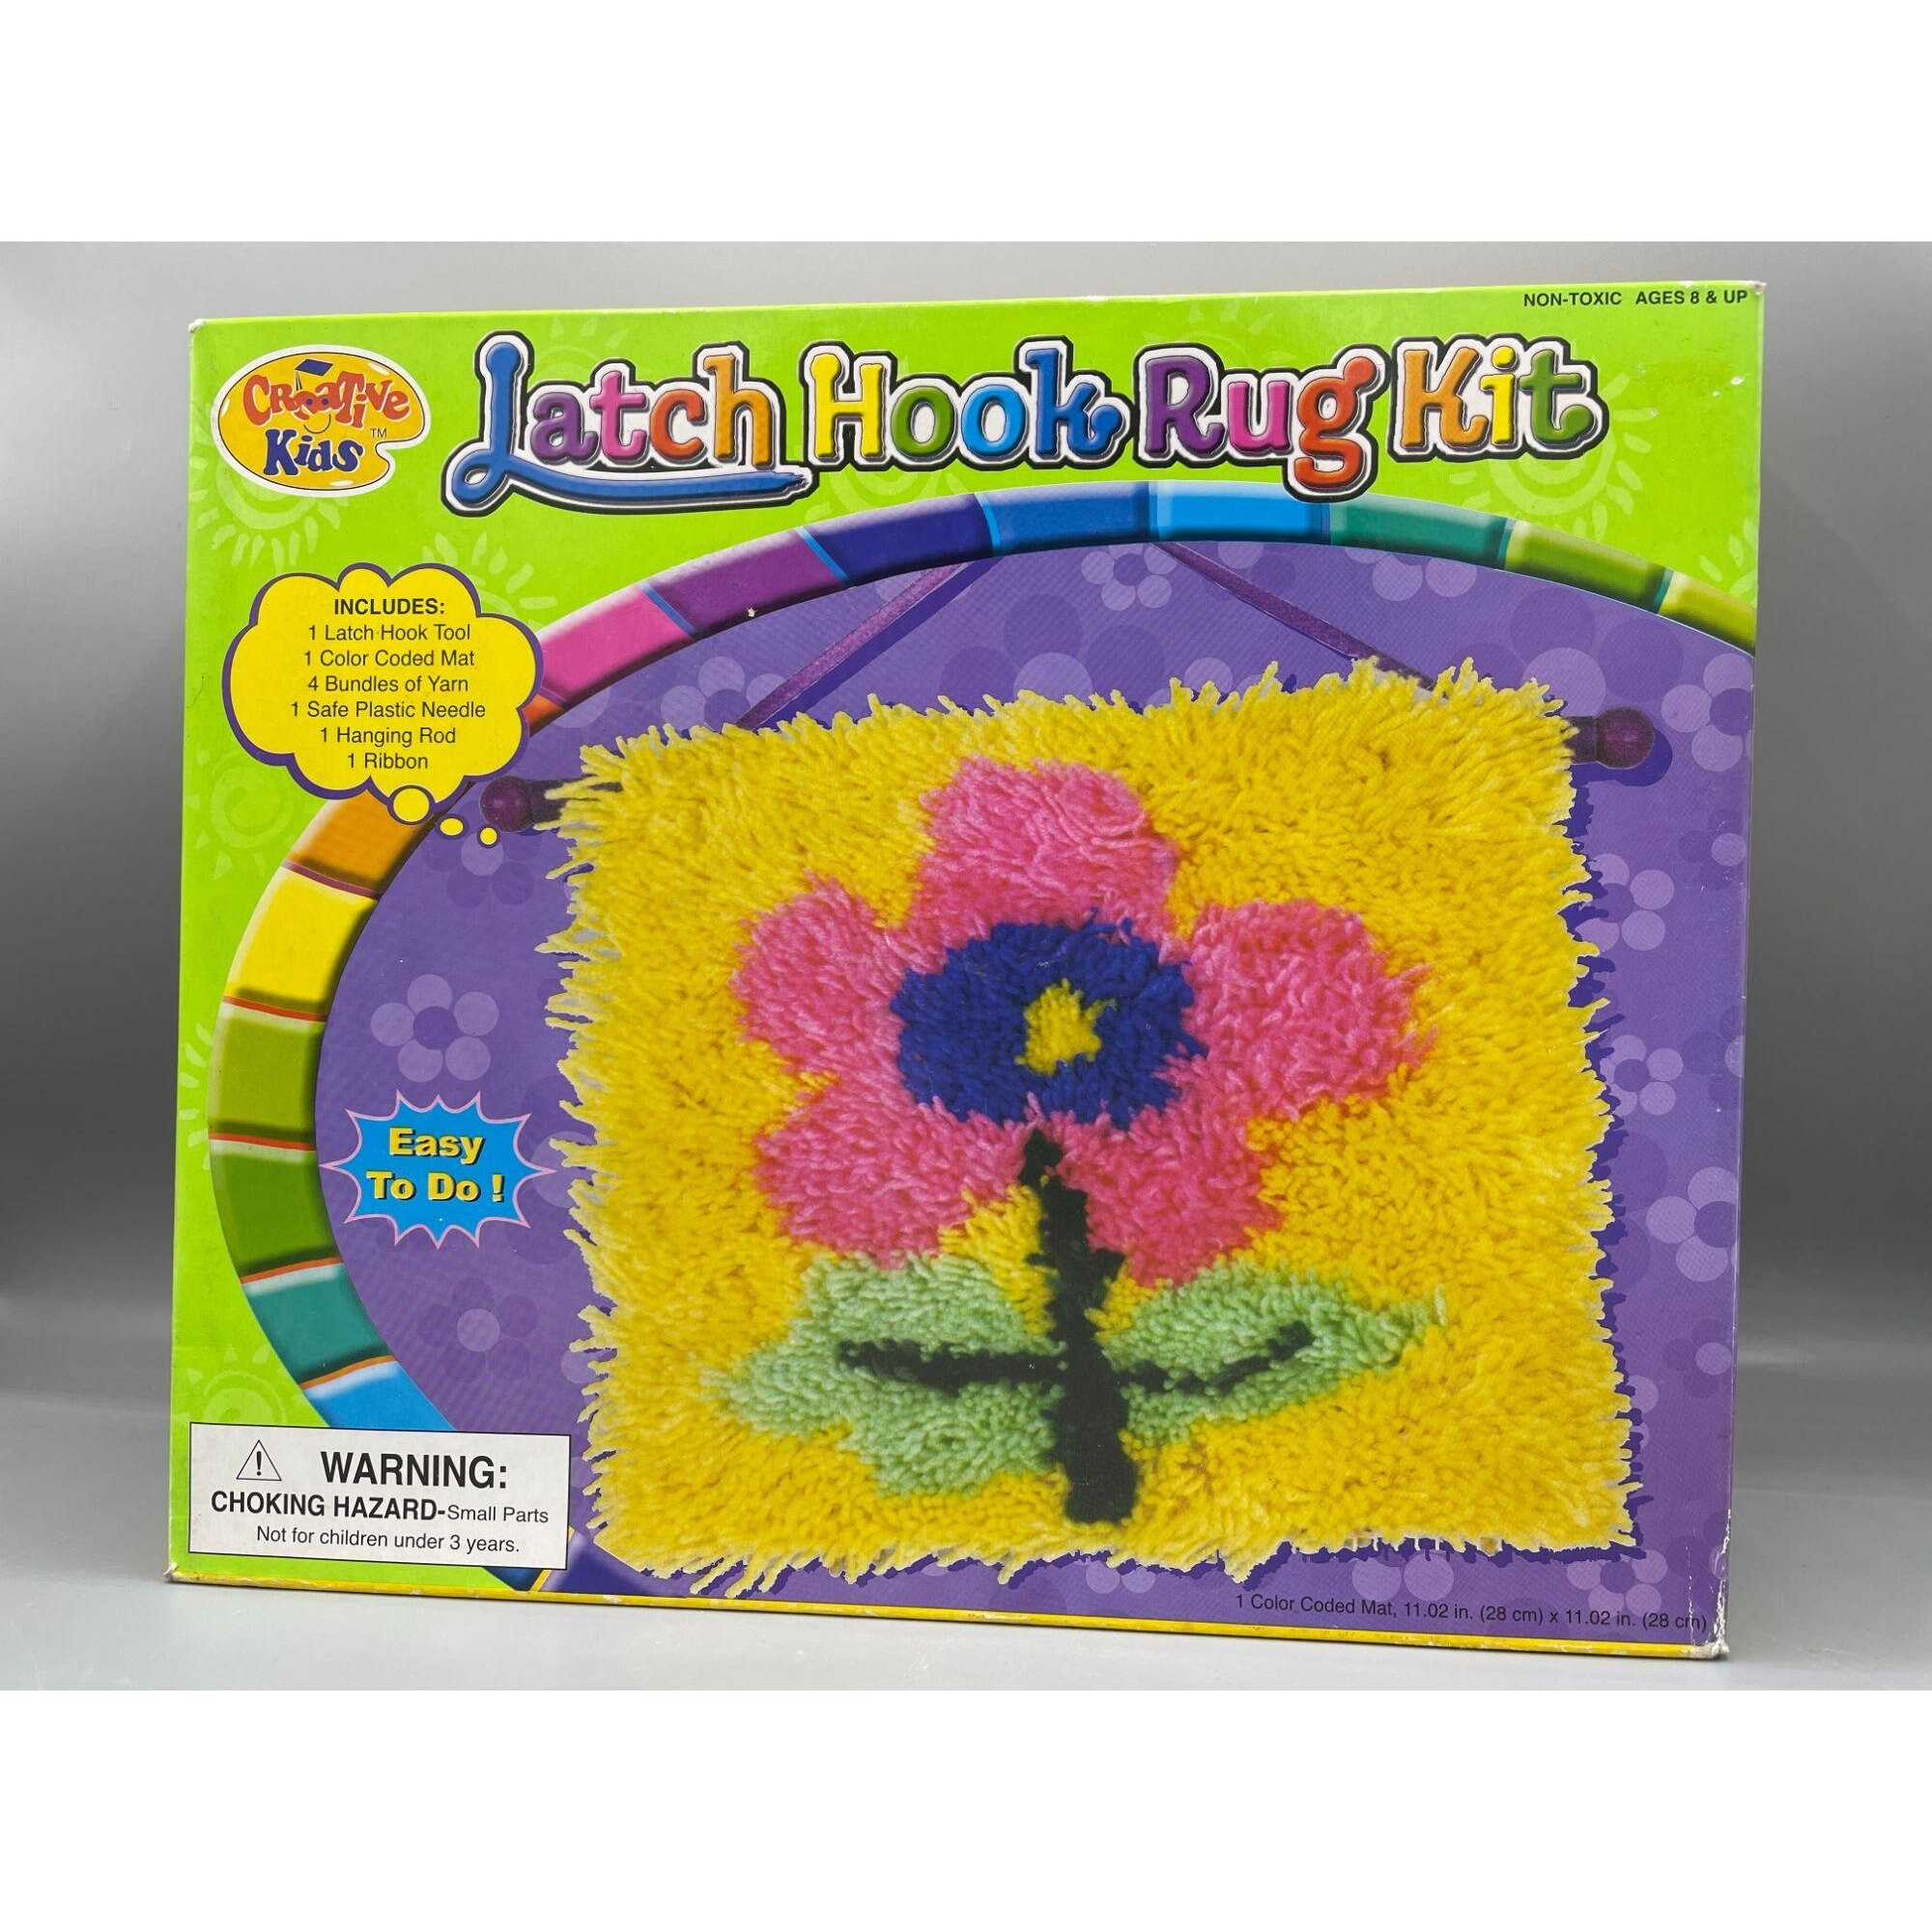 Latch Hook Rug Kit, Creative Kids, FLOWER KIT, New 